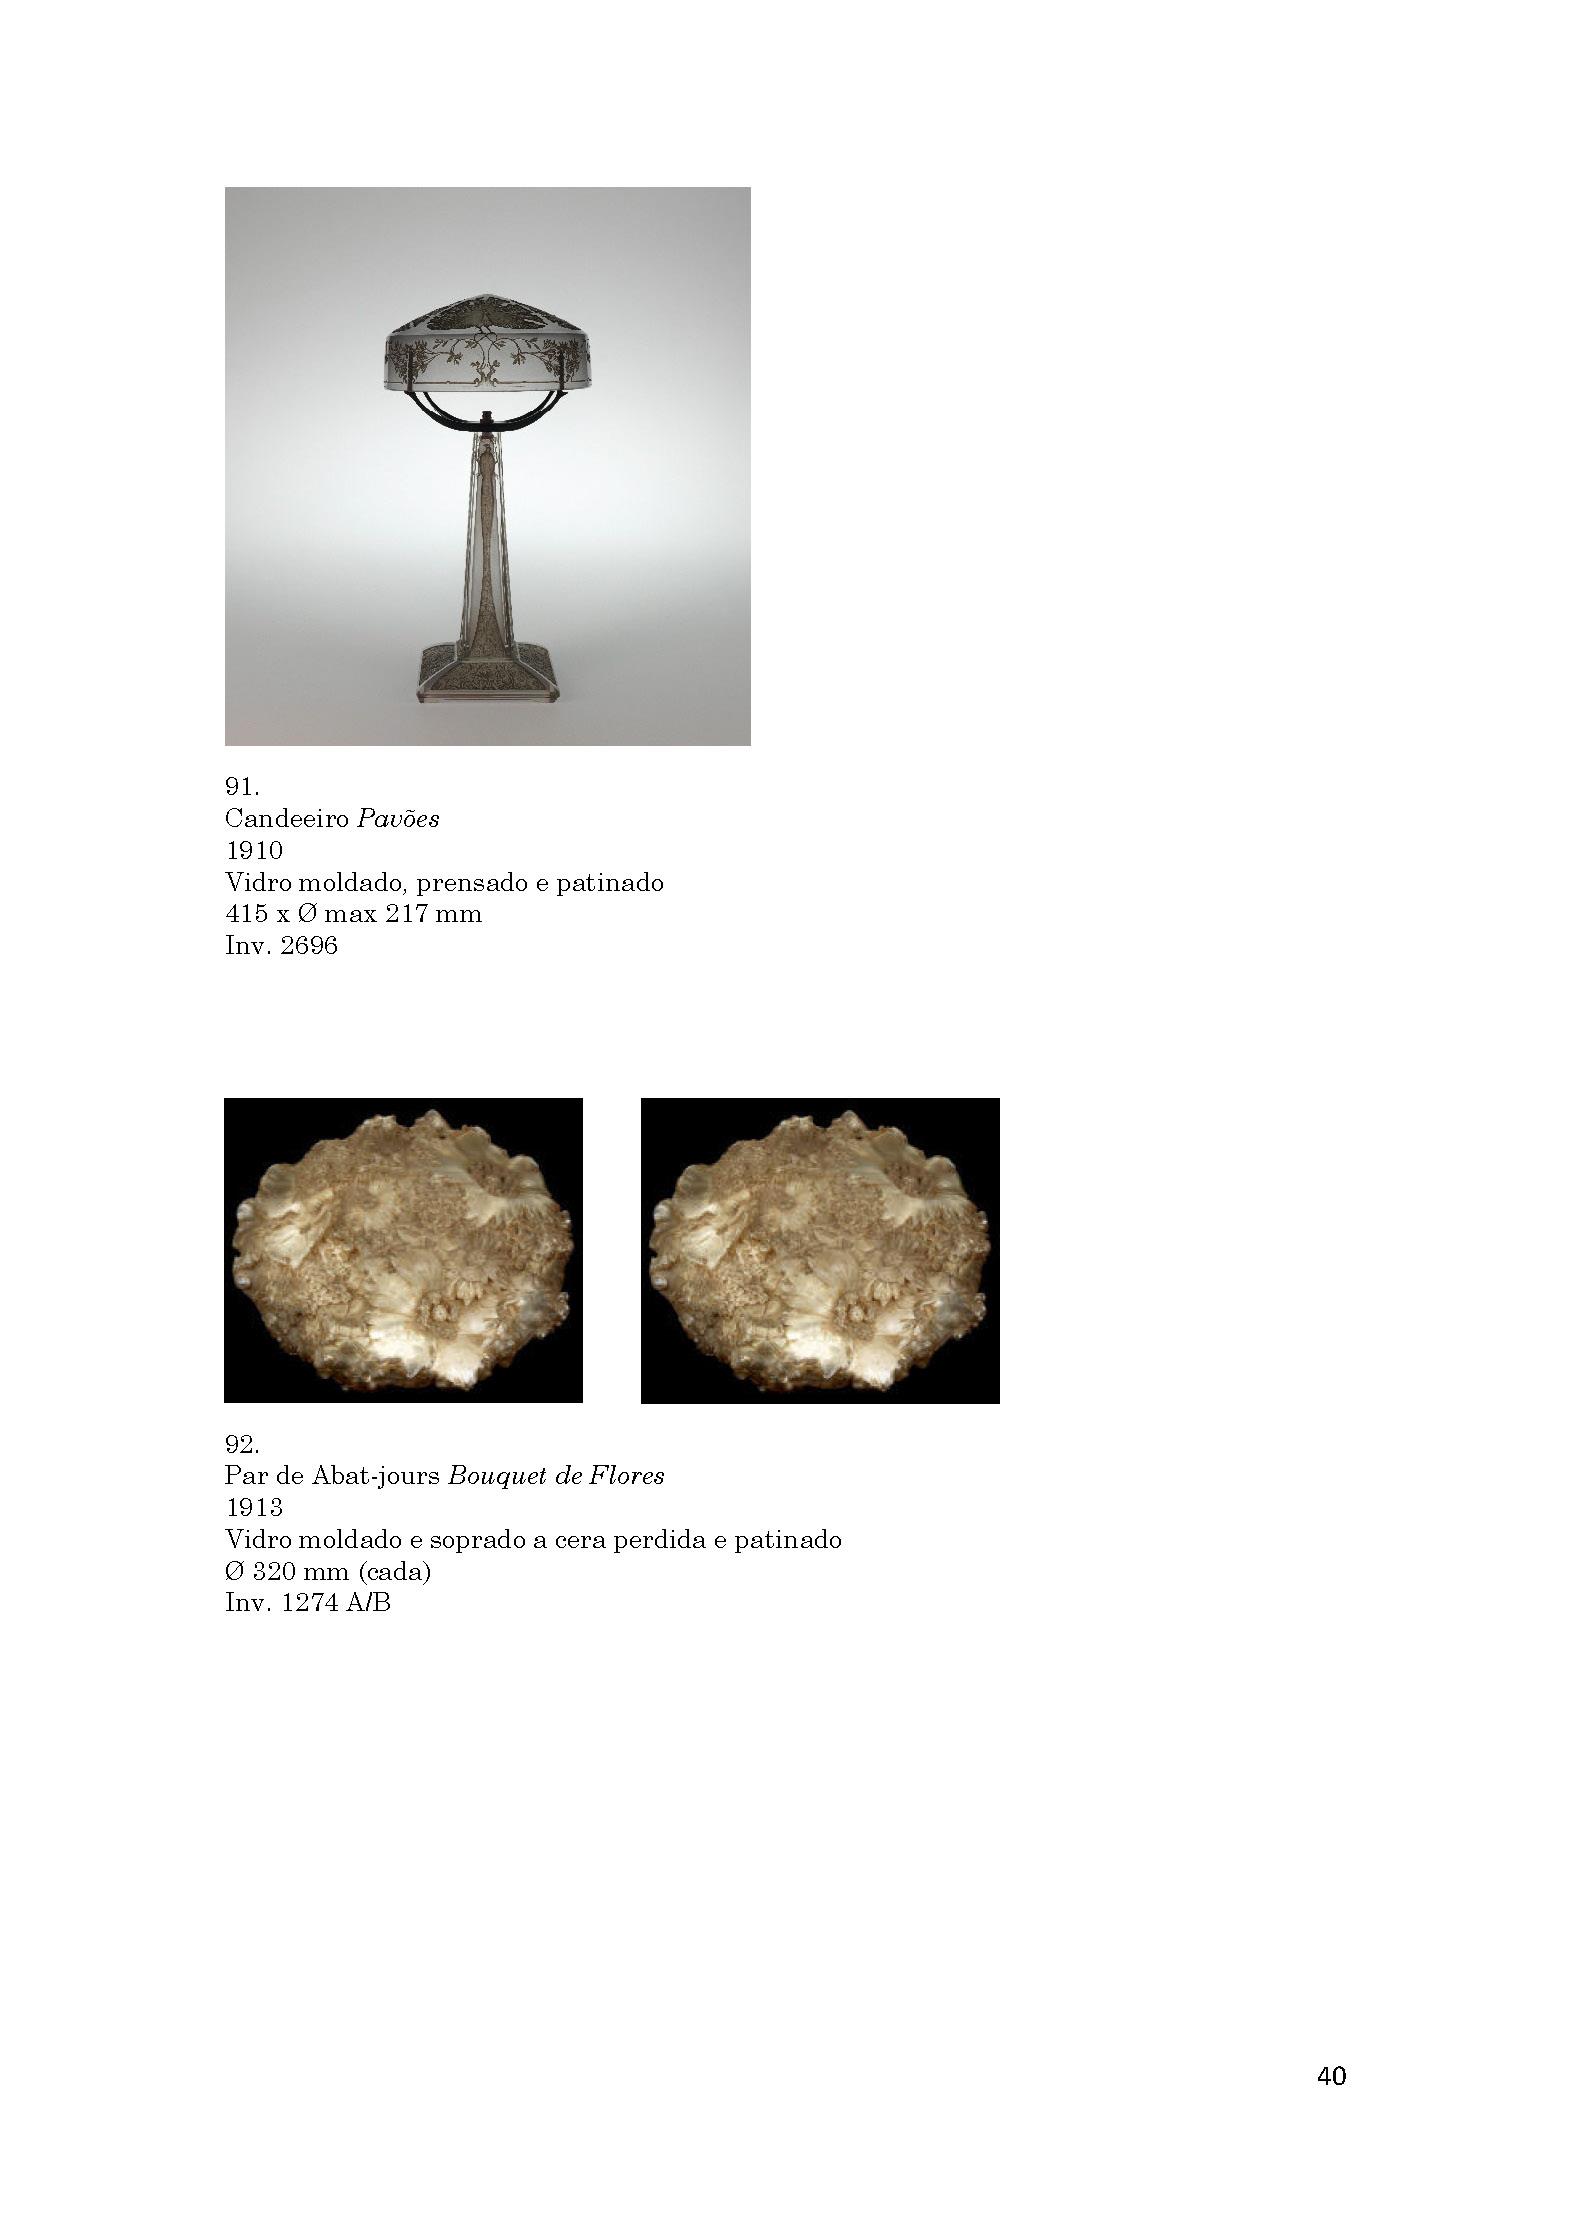 Lista_Vidros_Lalique_25.09.2020_1.40